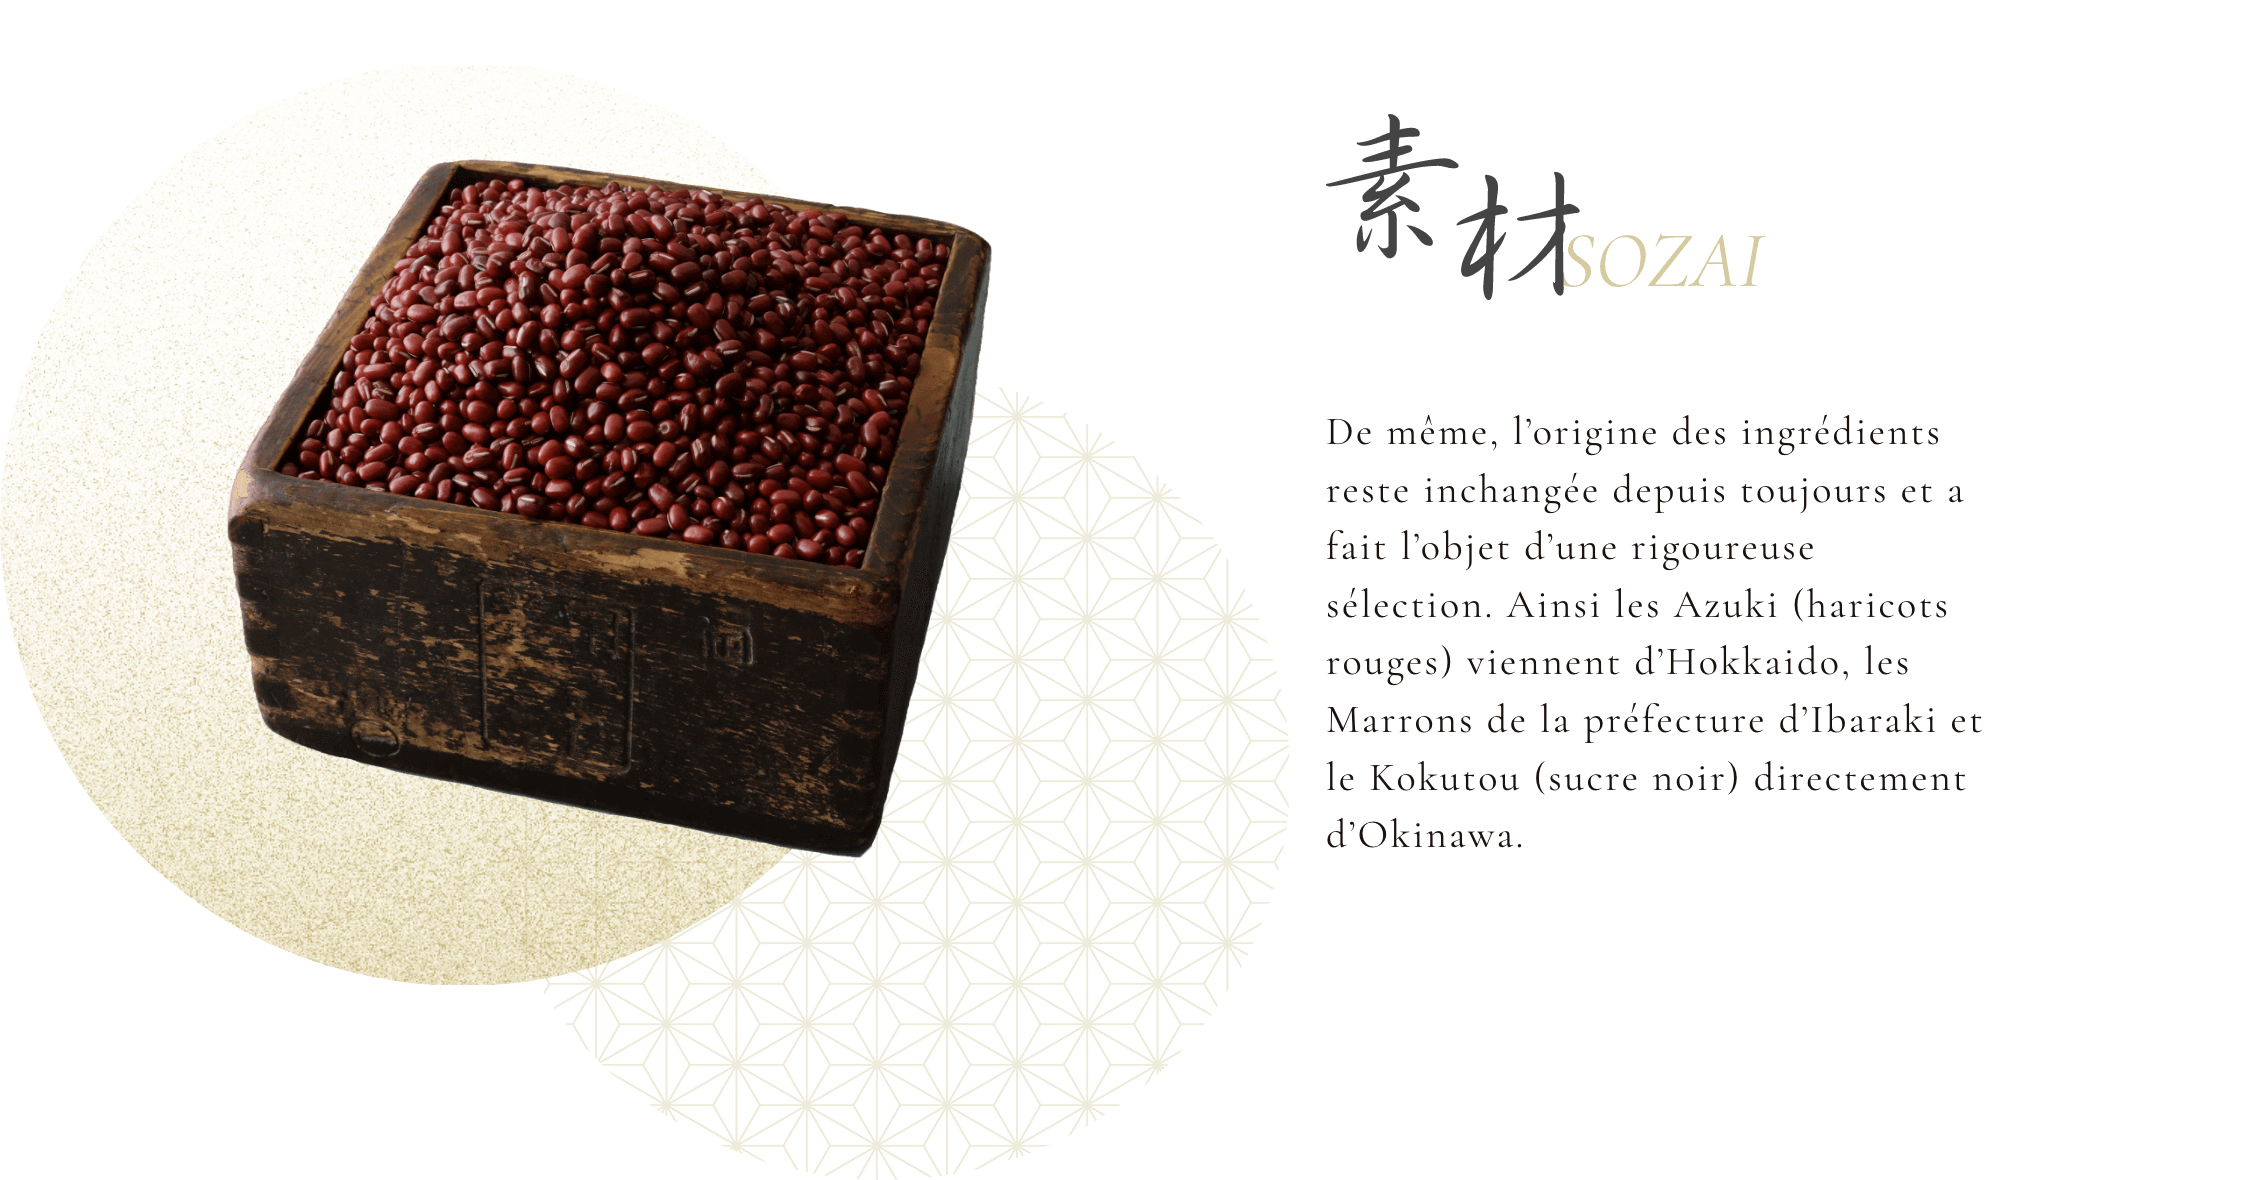 素材 De même, l’origine des ingrédients reste inchangée depuis toujours et a fait l’objet d’une rigoureuse sélection. Ainsi les Azuki (haricots rouges) viennent d’Hokkaido, les Marrons de la préfecture d’Ibaraki et le Kokutou (sucre noir) directement d’Okinawa.